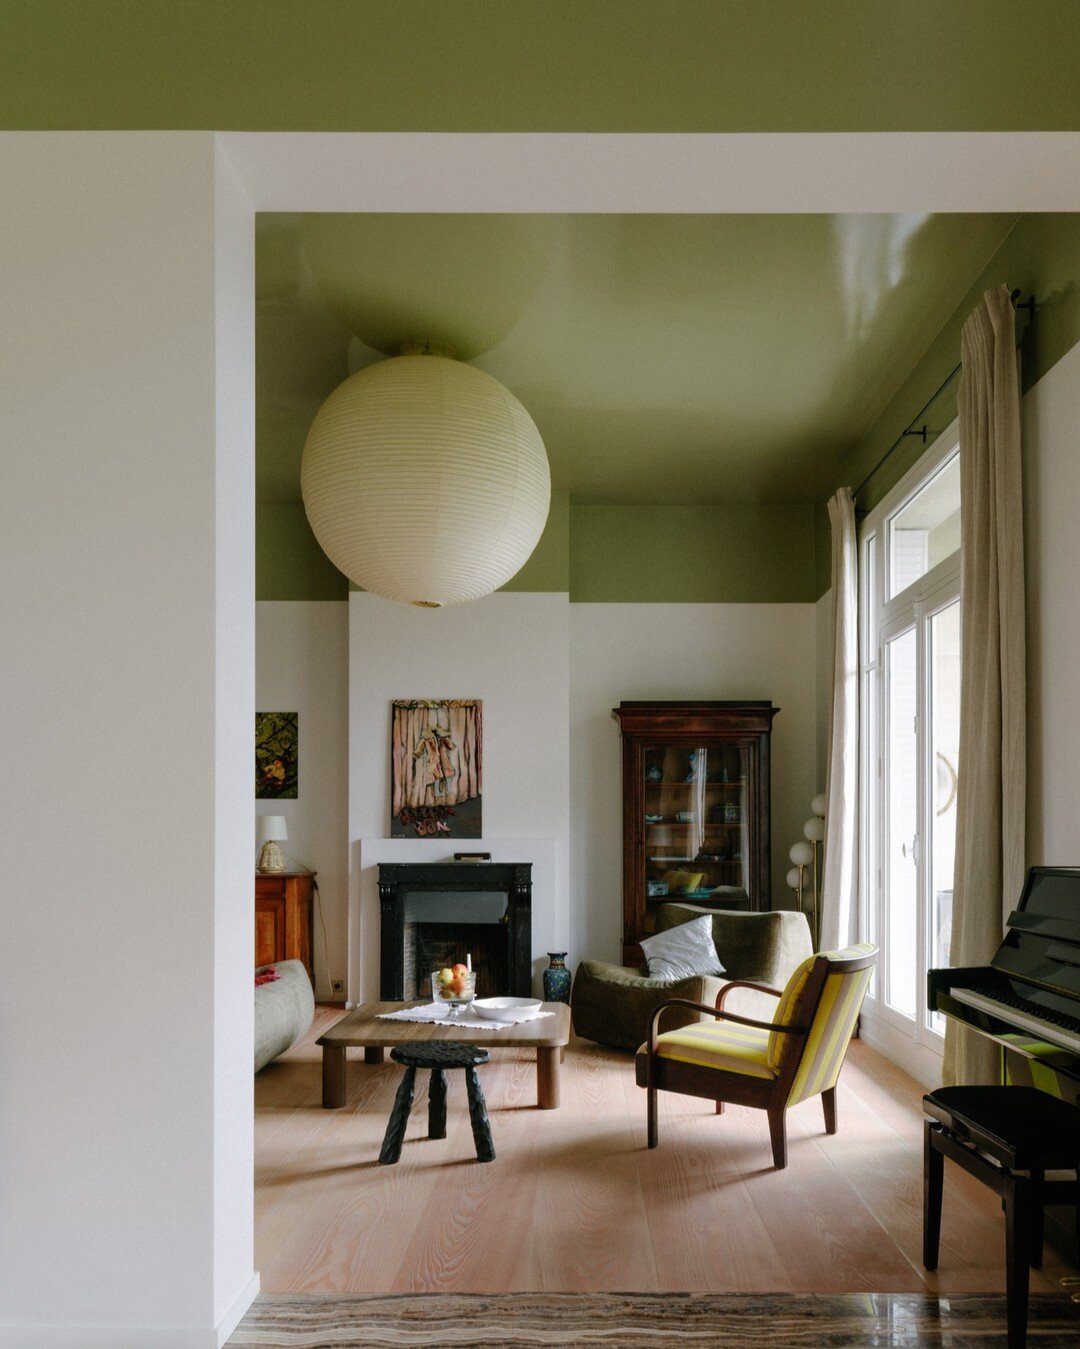 Vert, vert vert 🍀

💡 @bureausamuelgenet
📸 @giaimemeloni

#interior #interiors #interiordesign #architect #architecture #decor #taste #paris #fineinteriors #luxurylifestyle #luxury #signature #frenchtouch #contemporary #dezeen #architecturalphotogr